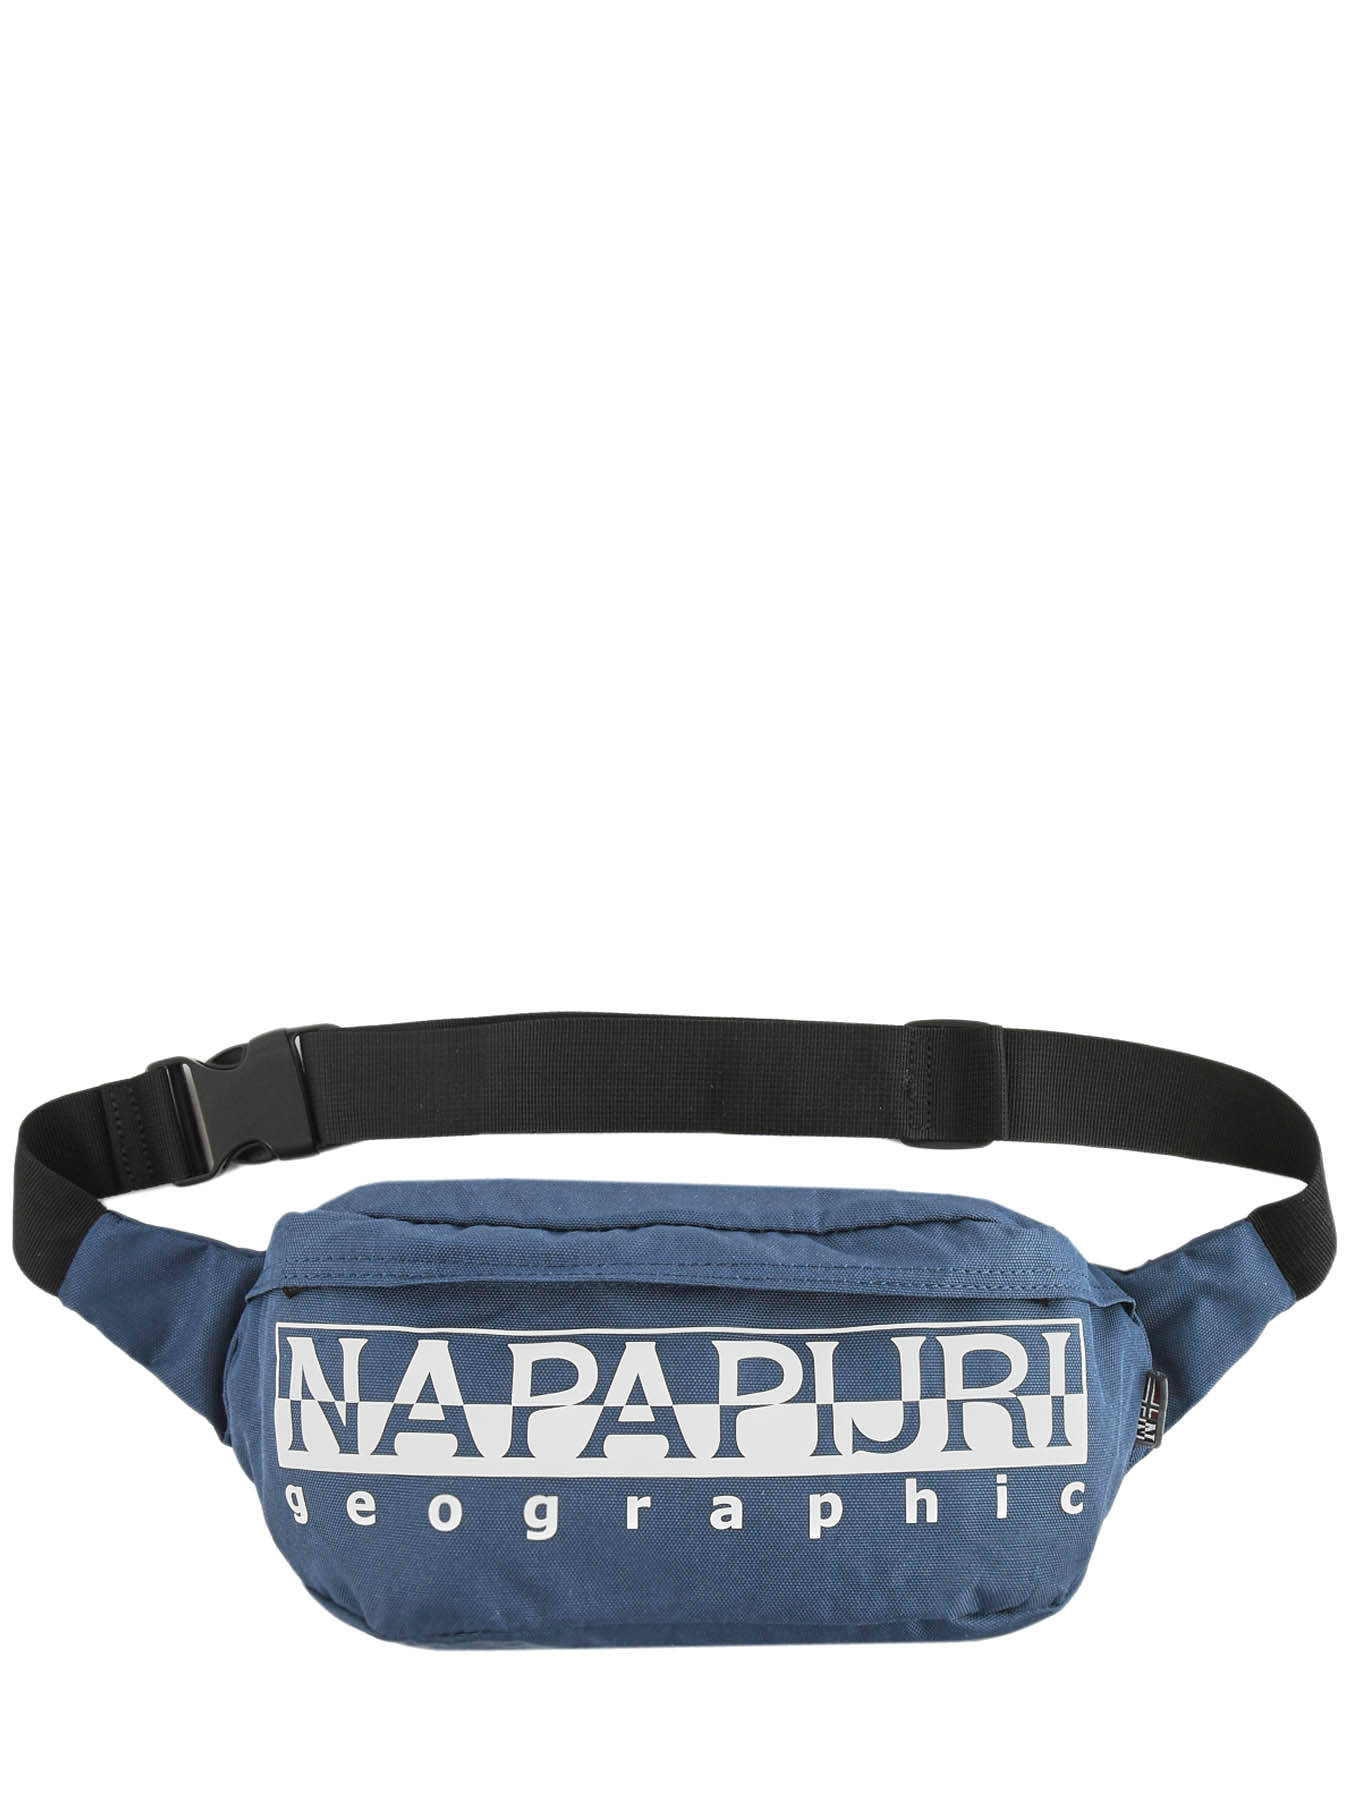 Large Backpack Napapijri Voyage Blu Marine - Shop and Buy online